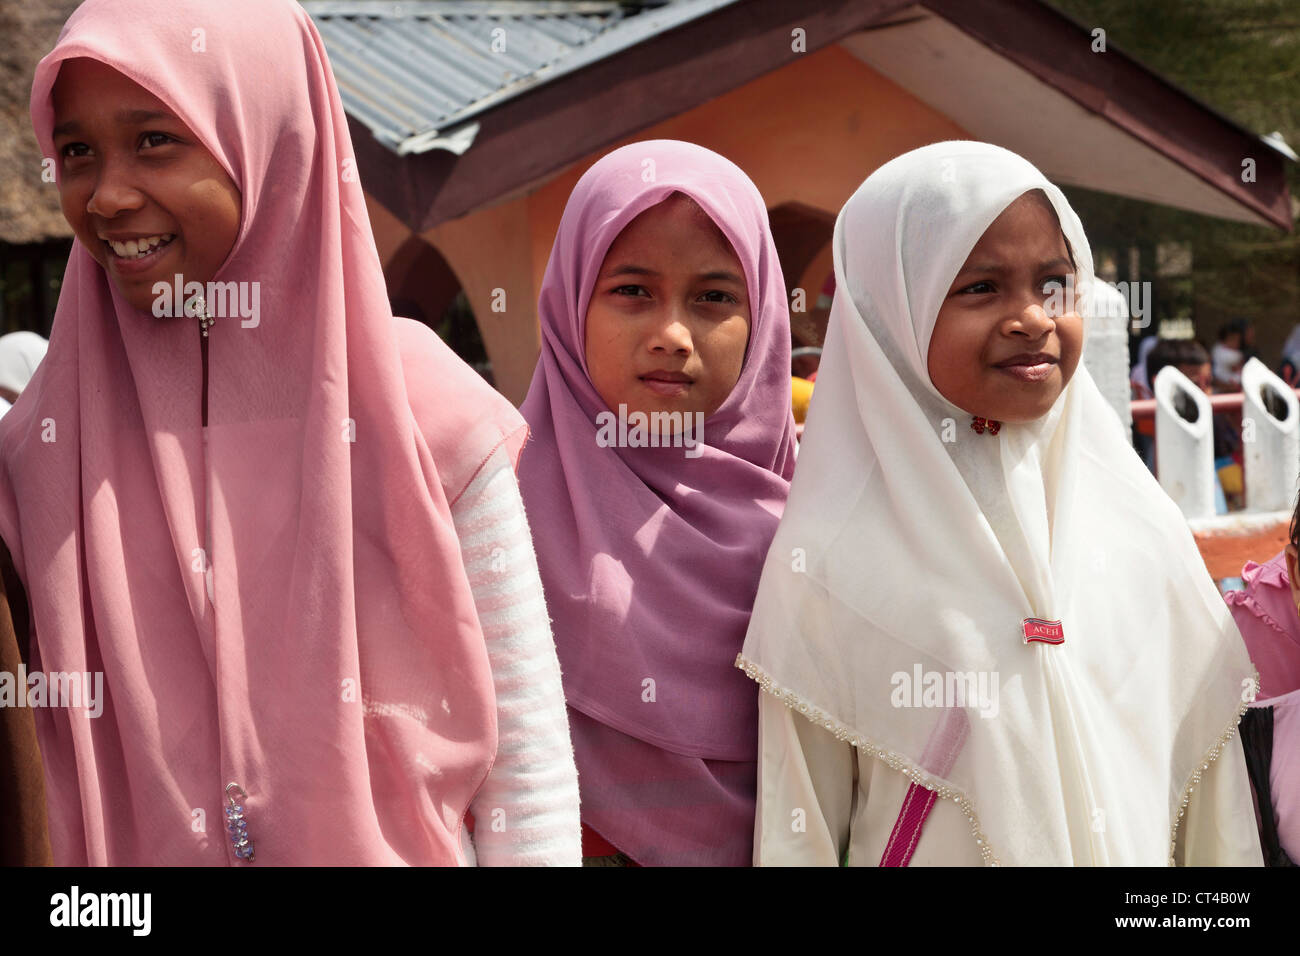 Indonasian Muslim Girls Images